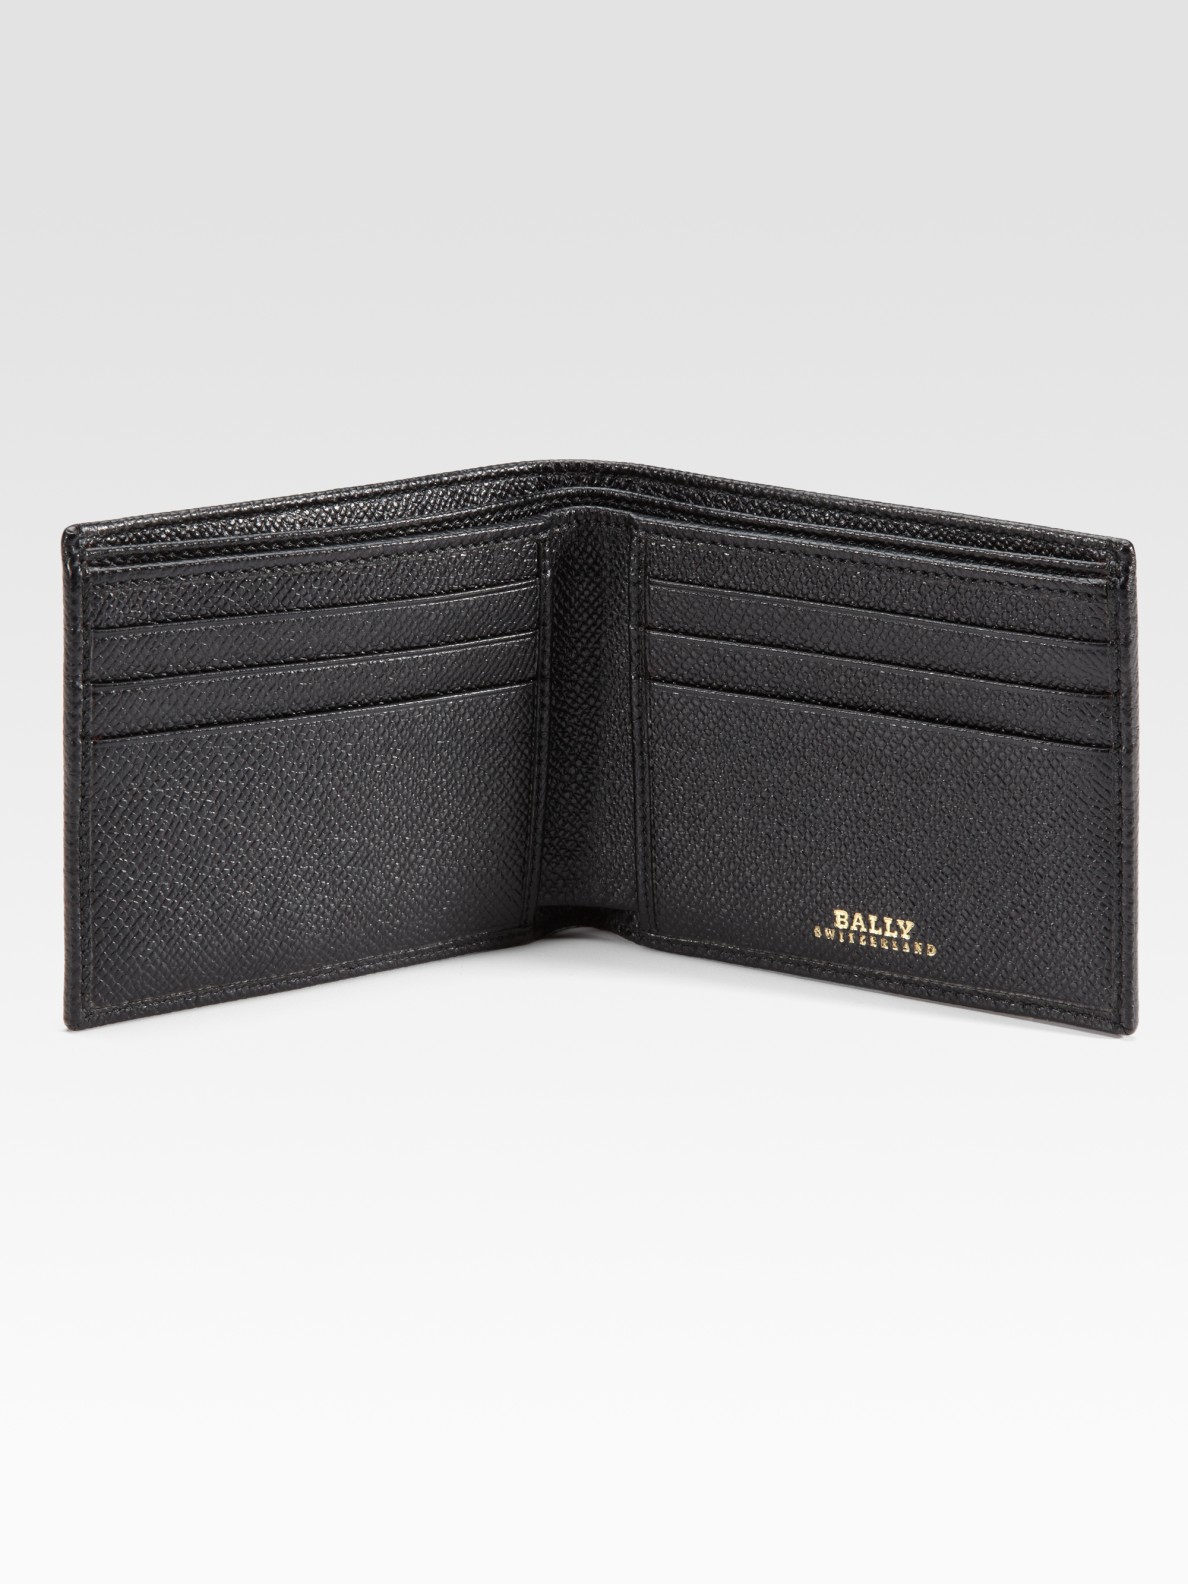 Lyst - Bally Leather Billfold Wallet in Black for Men